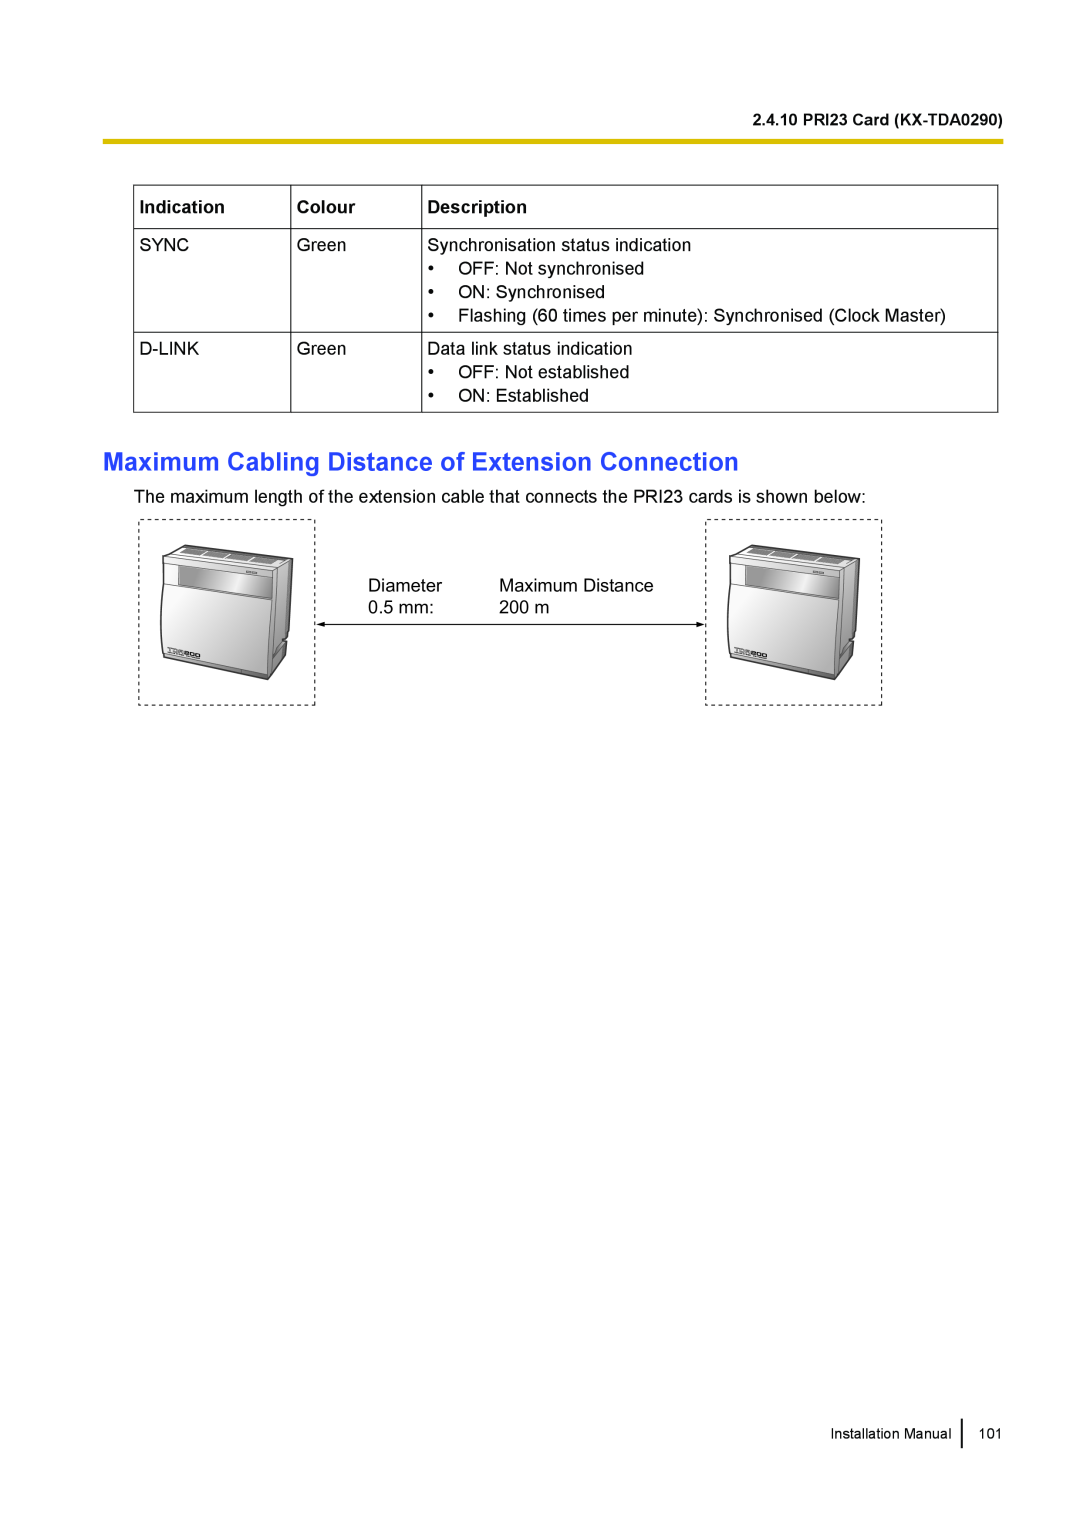 Panasonic KX-TDA100 installation manual Maximum Cabling Distance of Extension Connection, Indication, Colour, Description 